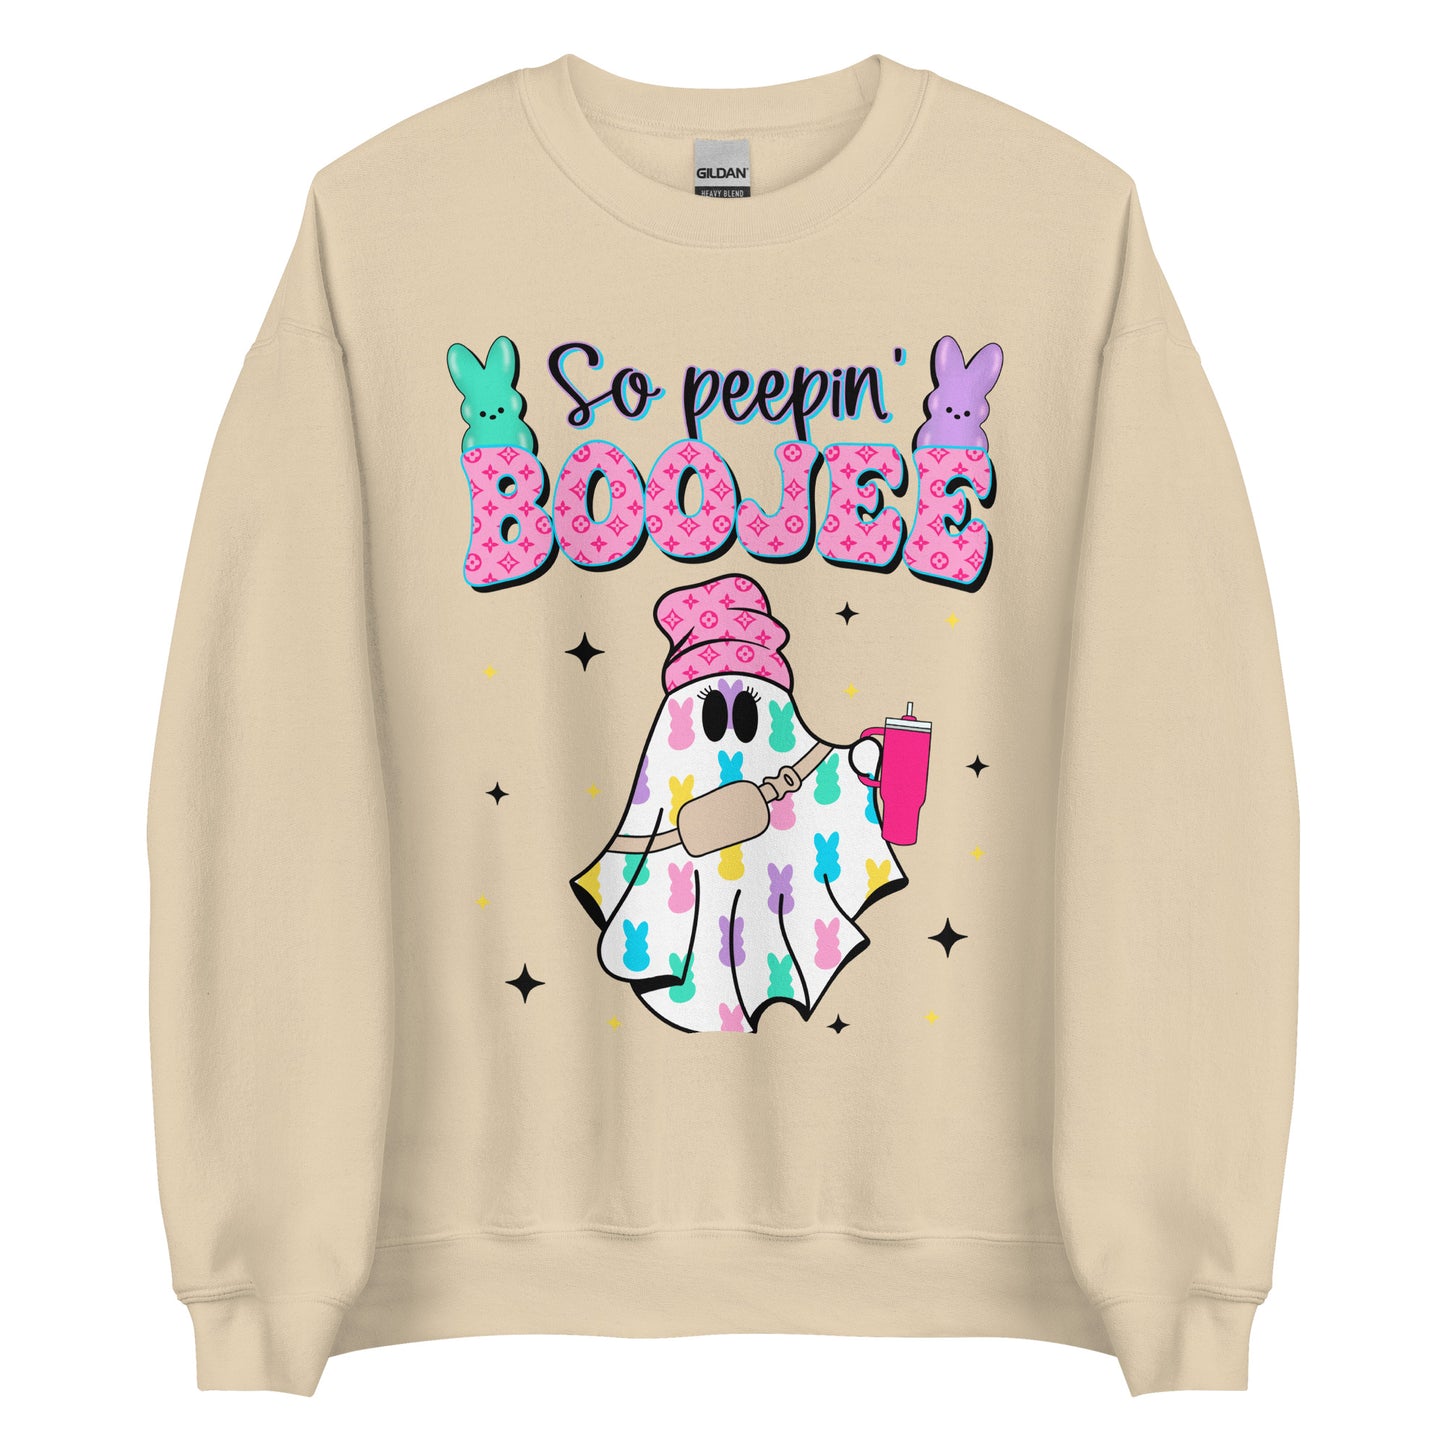 So Peepin' Boojee Sweatshirt